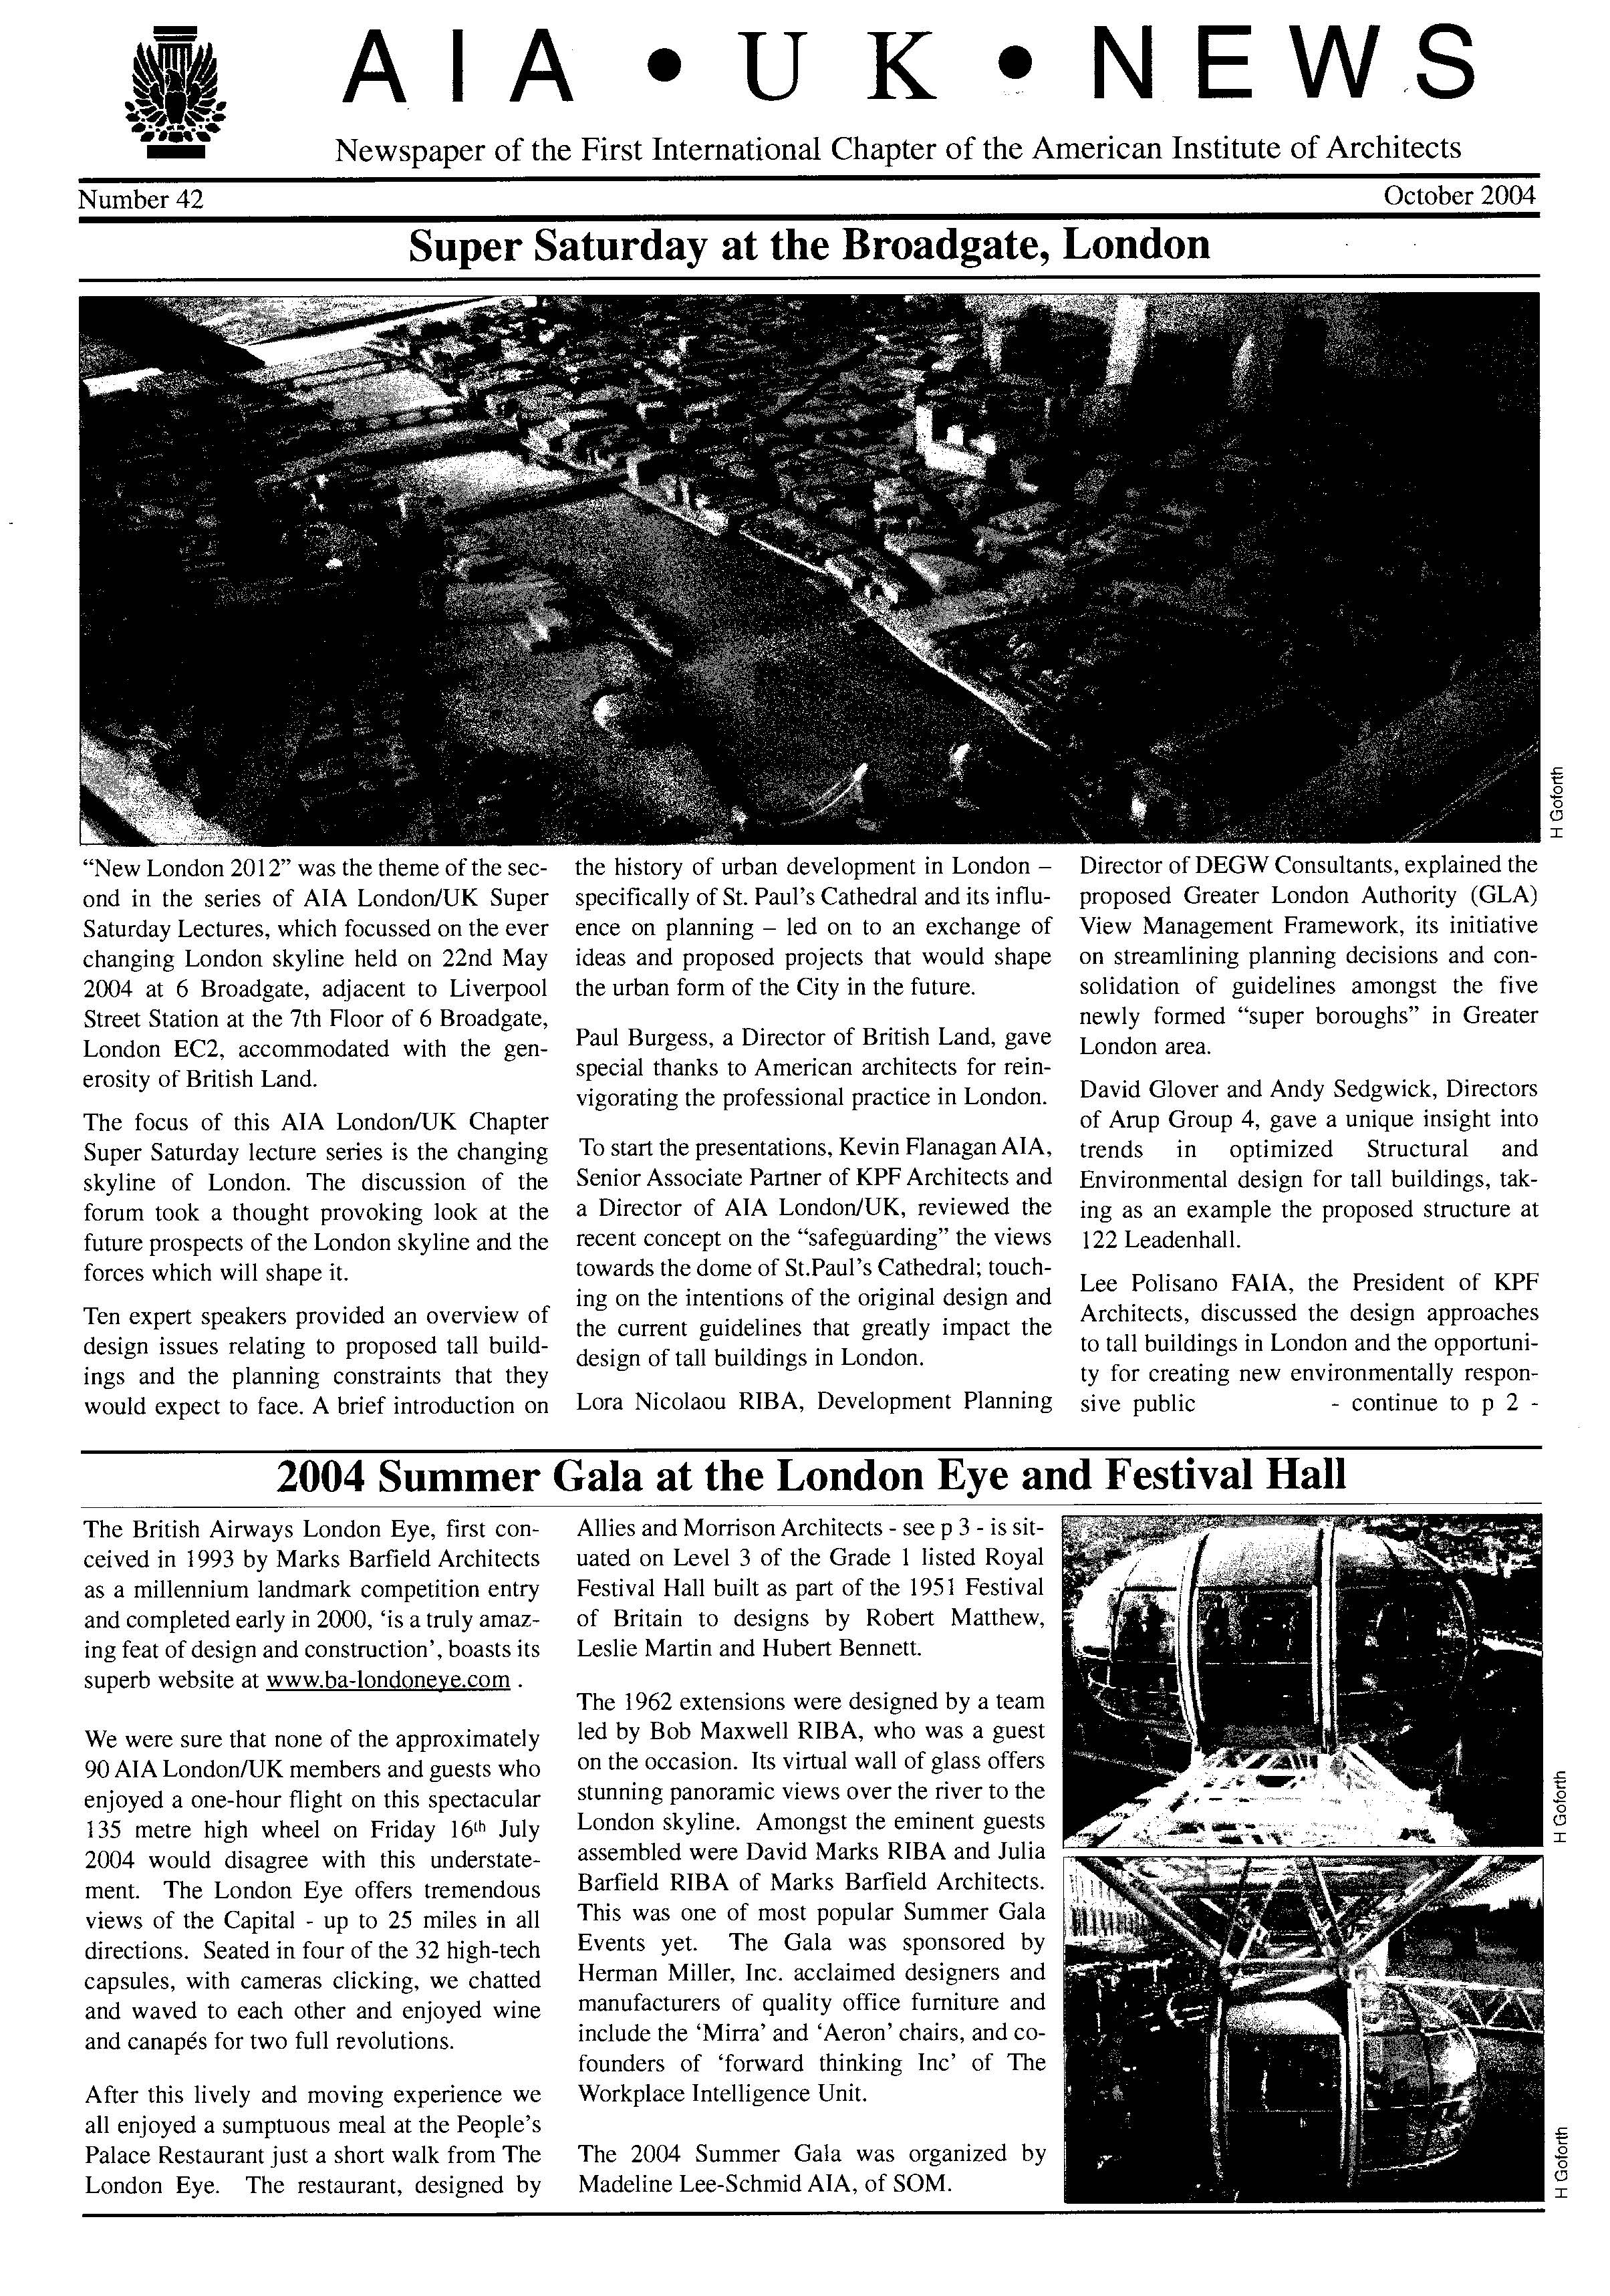 42 - October 2004 web_Page_1.jpg